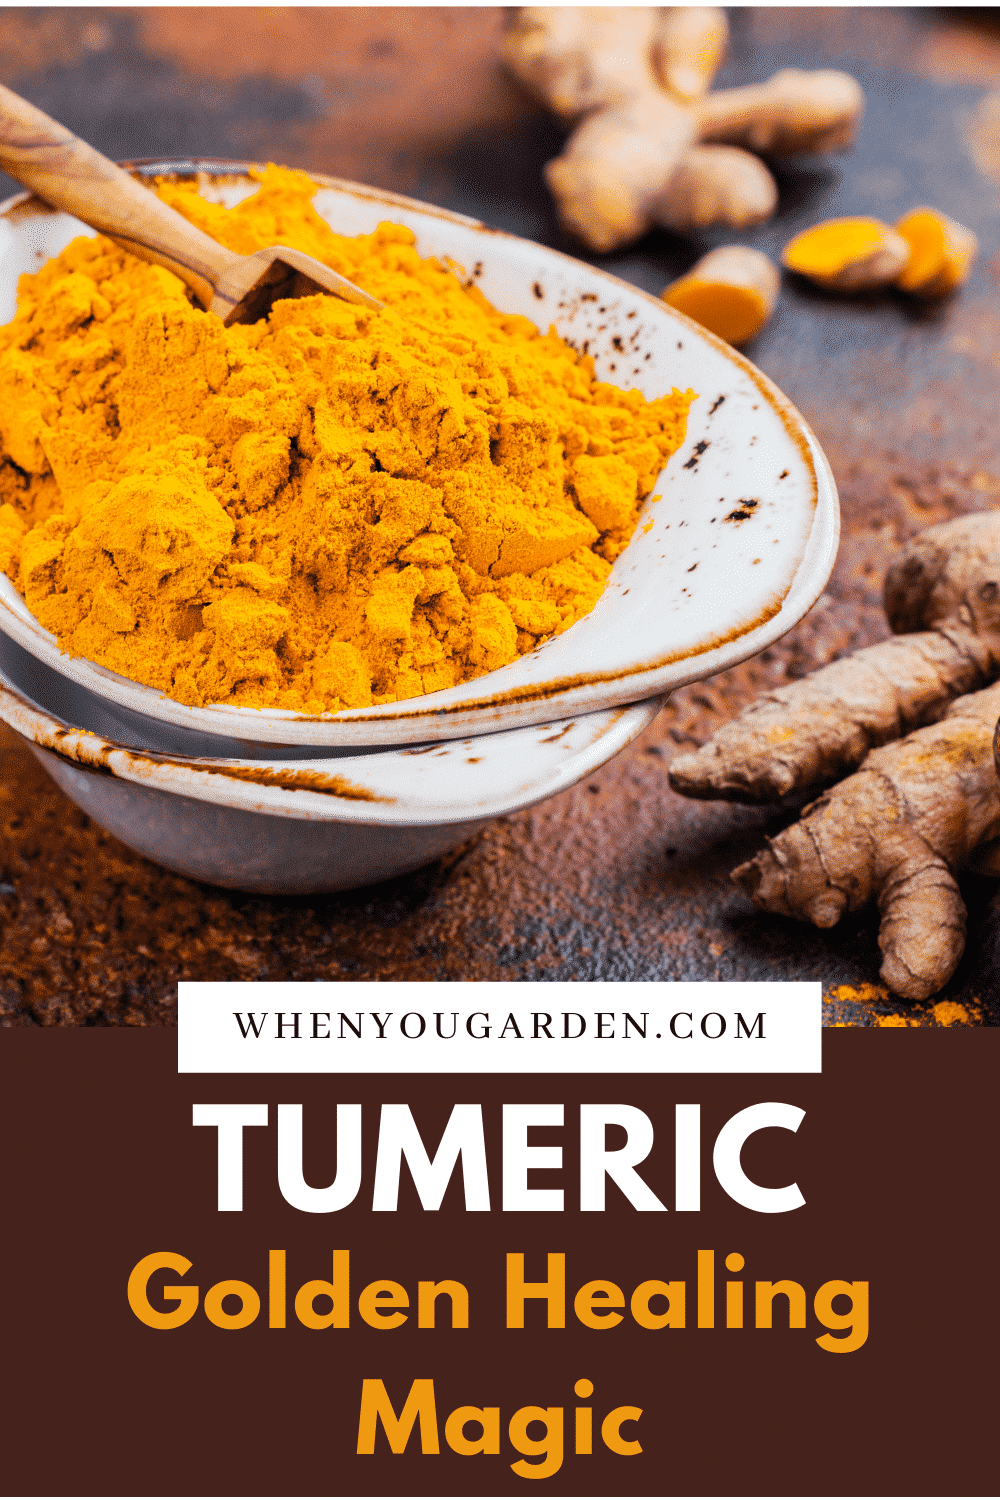 Turmeric: The Golden Healing Magic